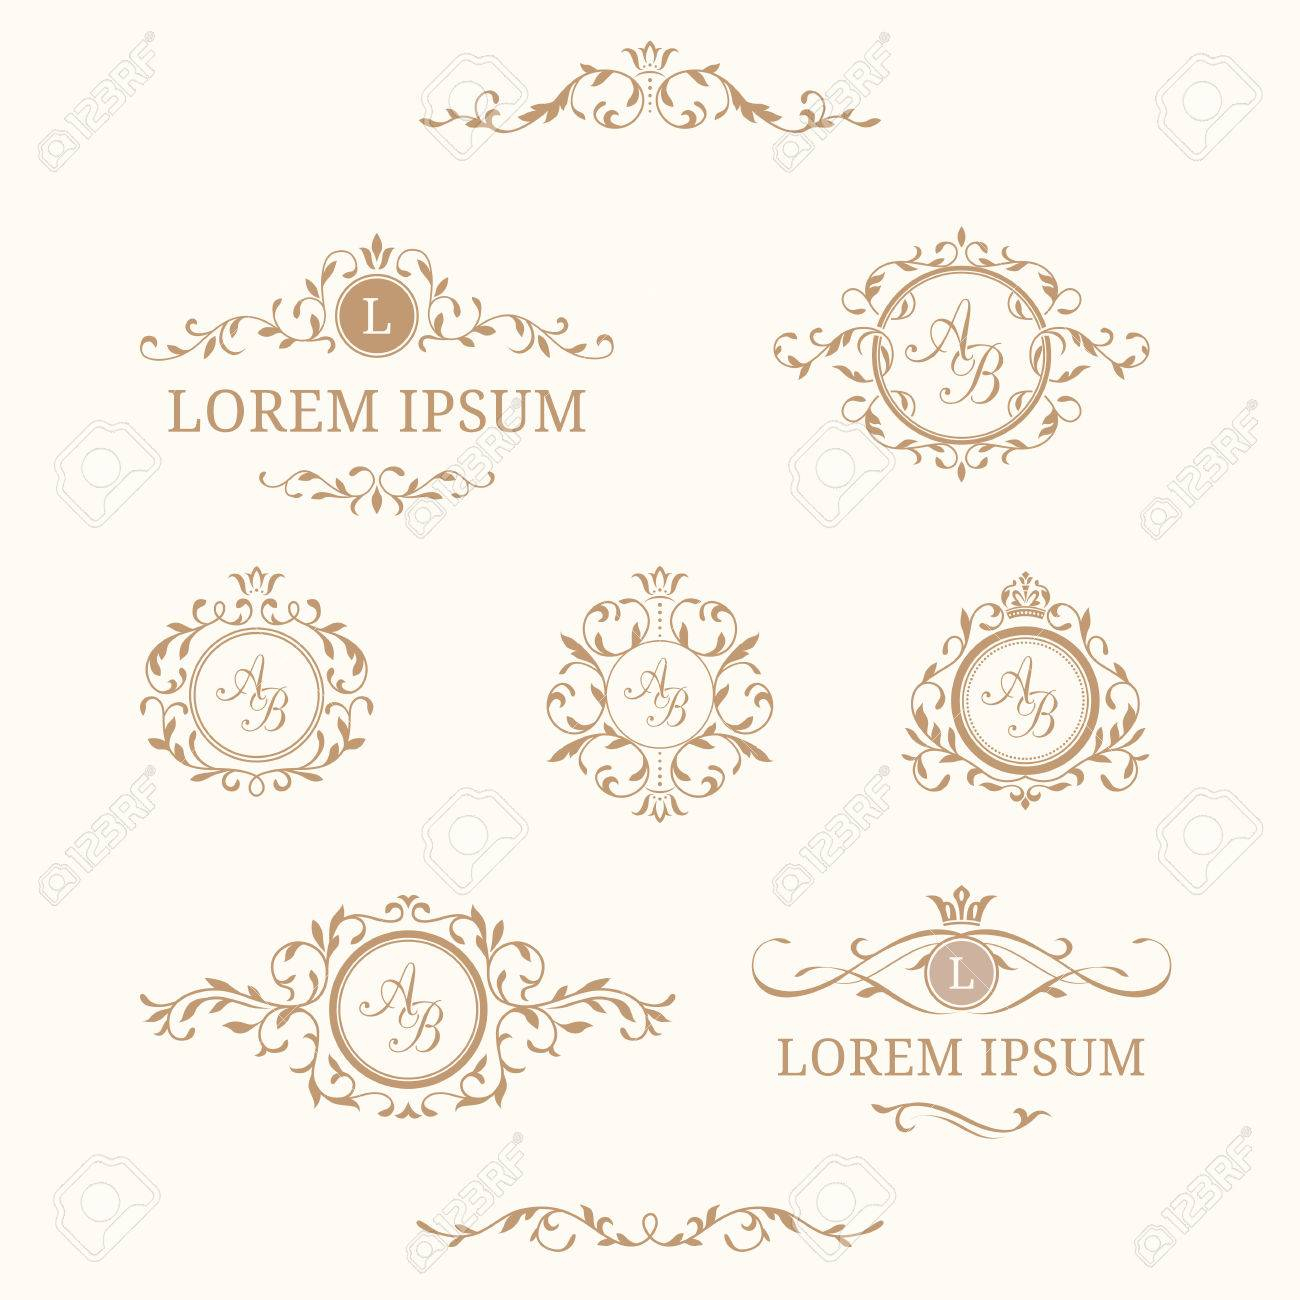 Elegant Floral Monograms And Borders Design Templates For regarding dimensions 1300 X 1300